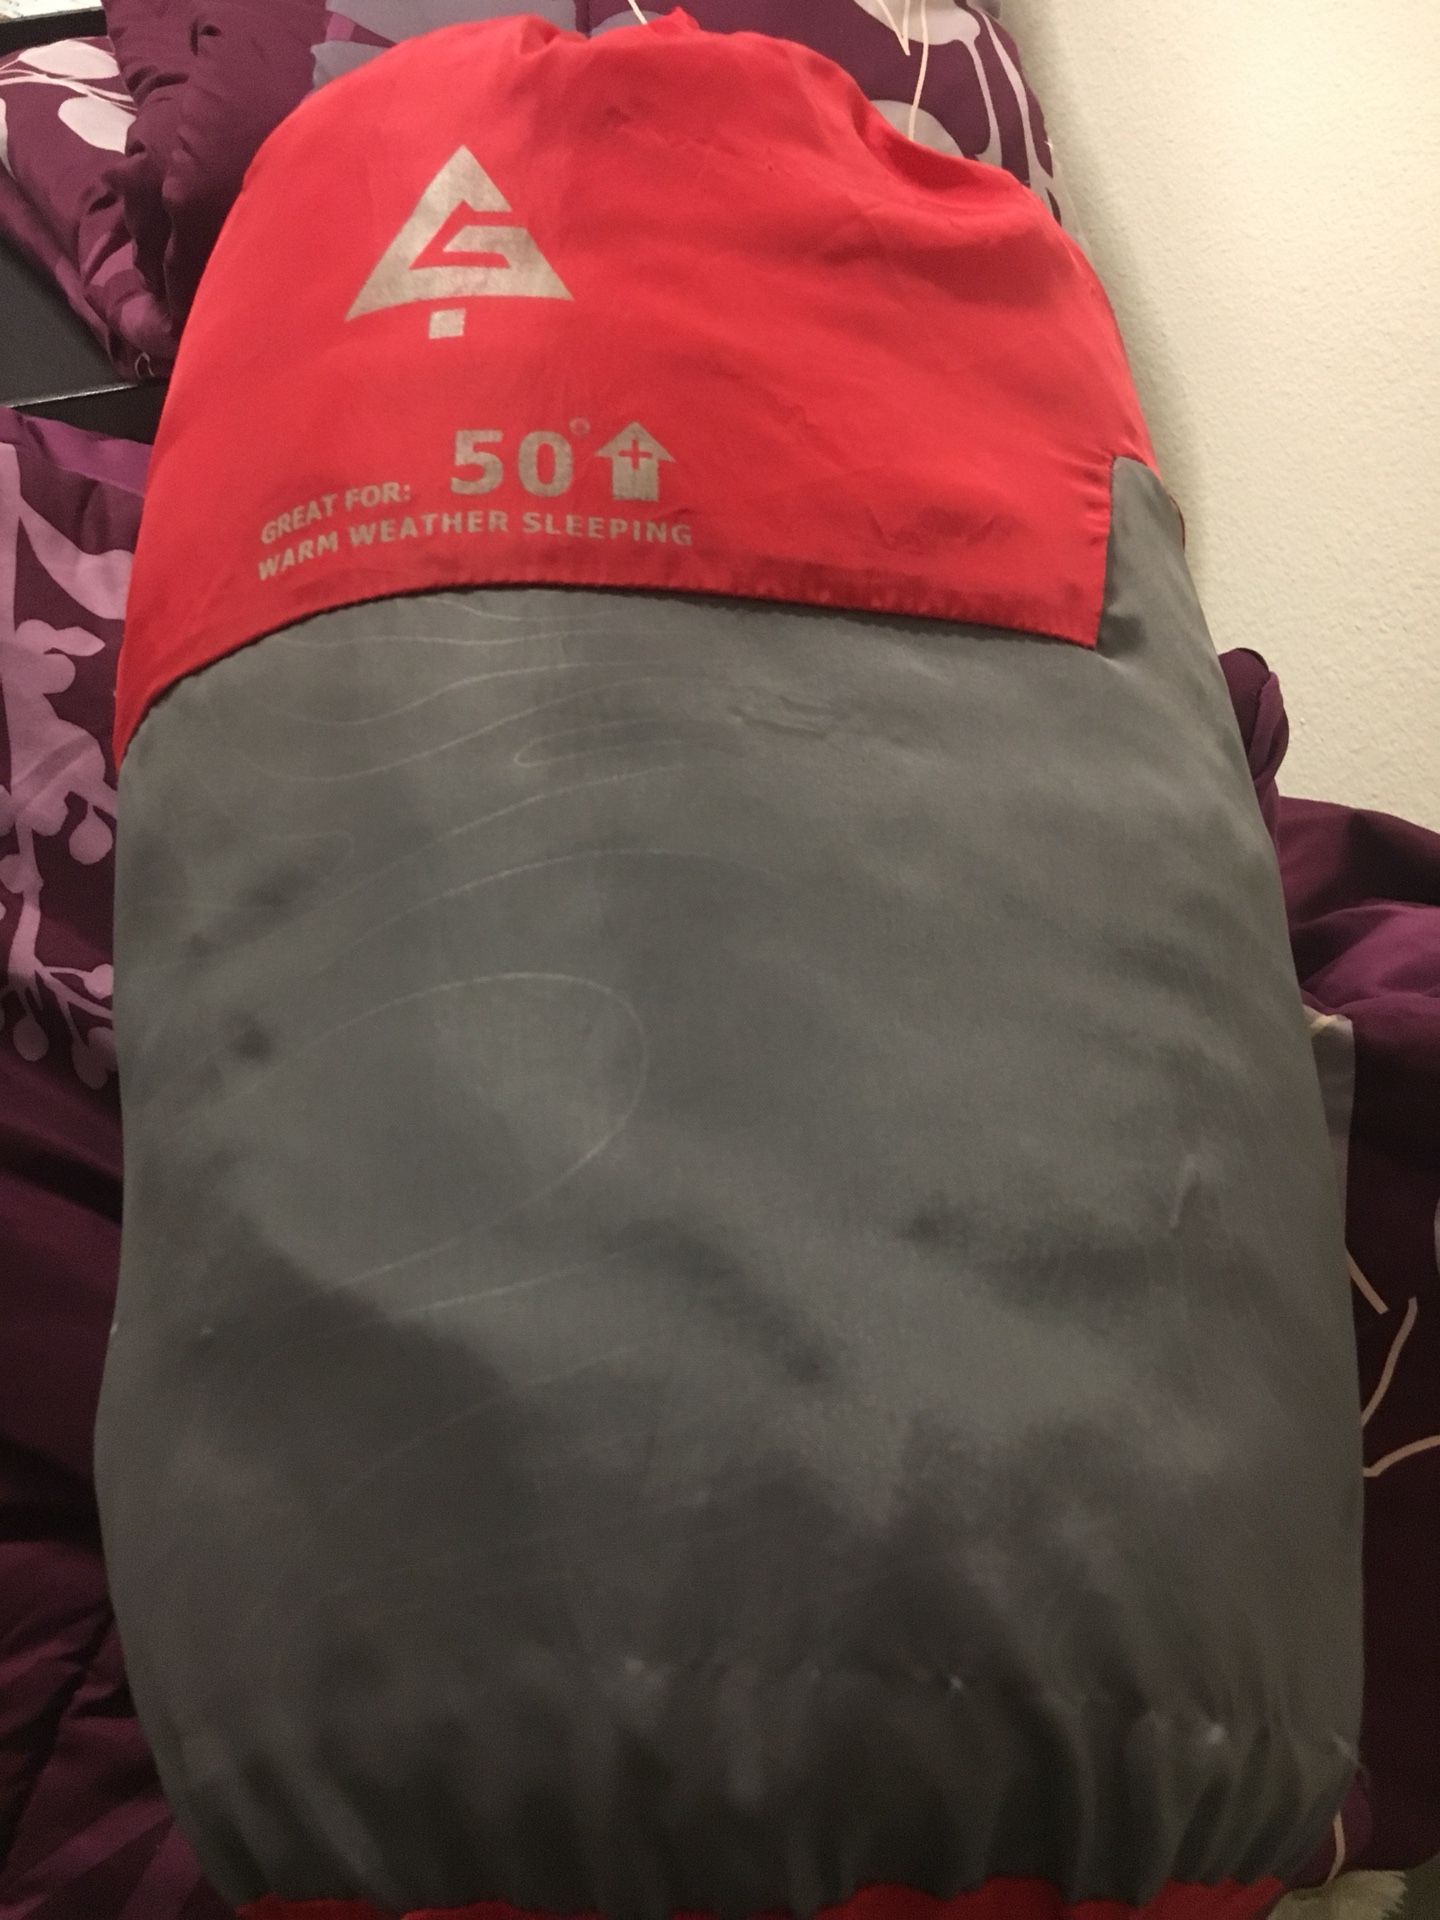 Sleeping bag (the zipper doesn’t work) kids size